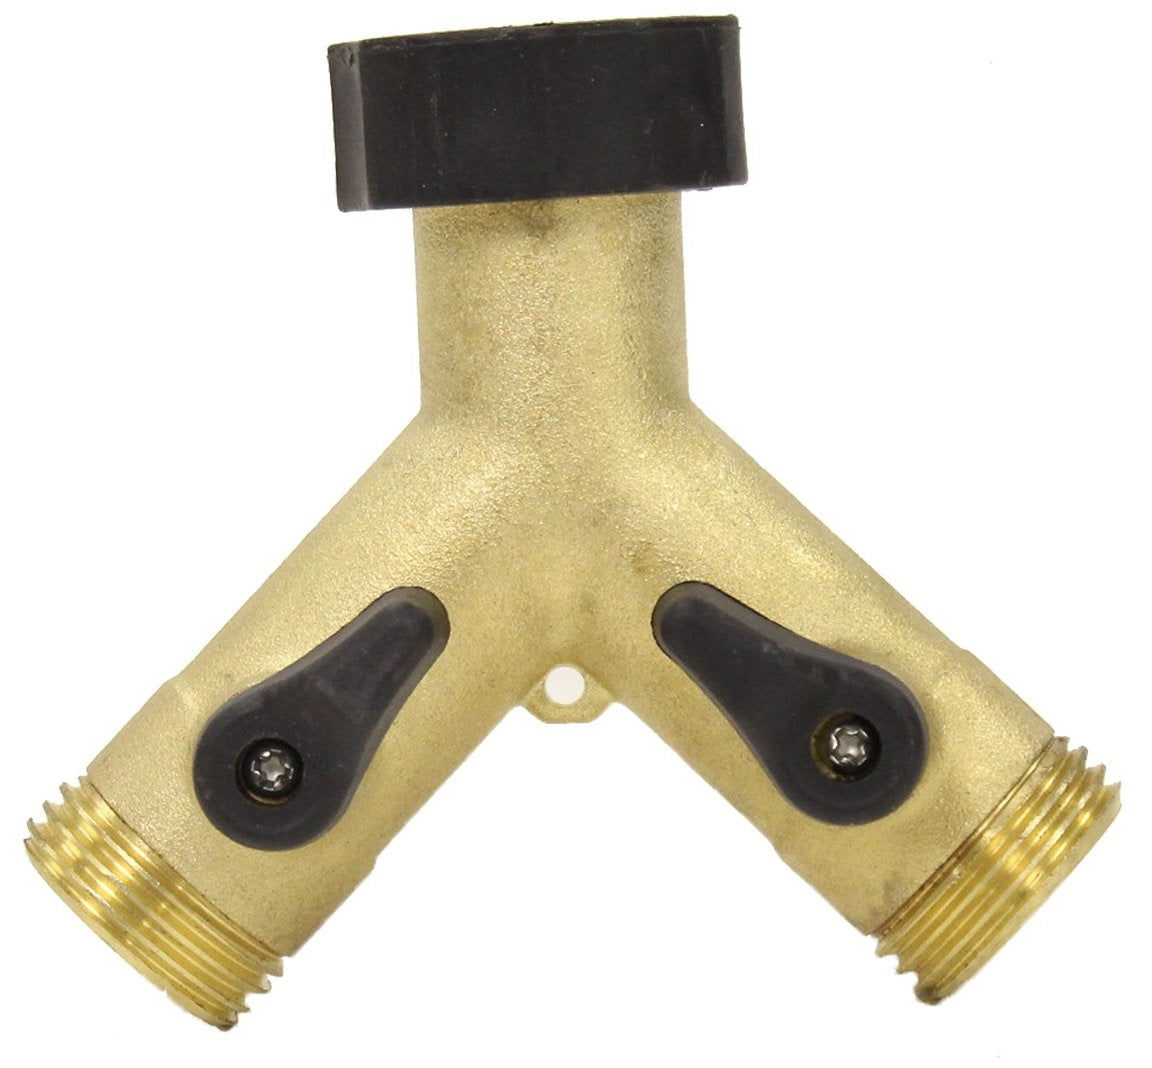 Gilmour 813024-1002 Y-Hose Connector with Shut Offs, Brass, 3/4 inch